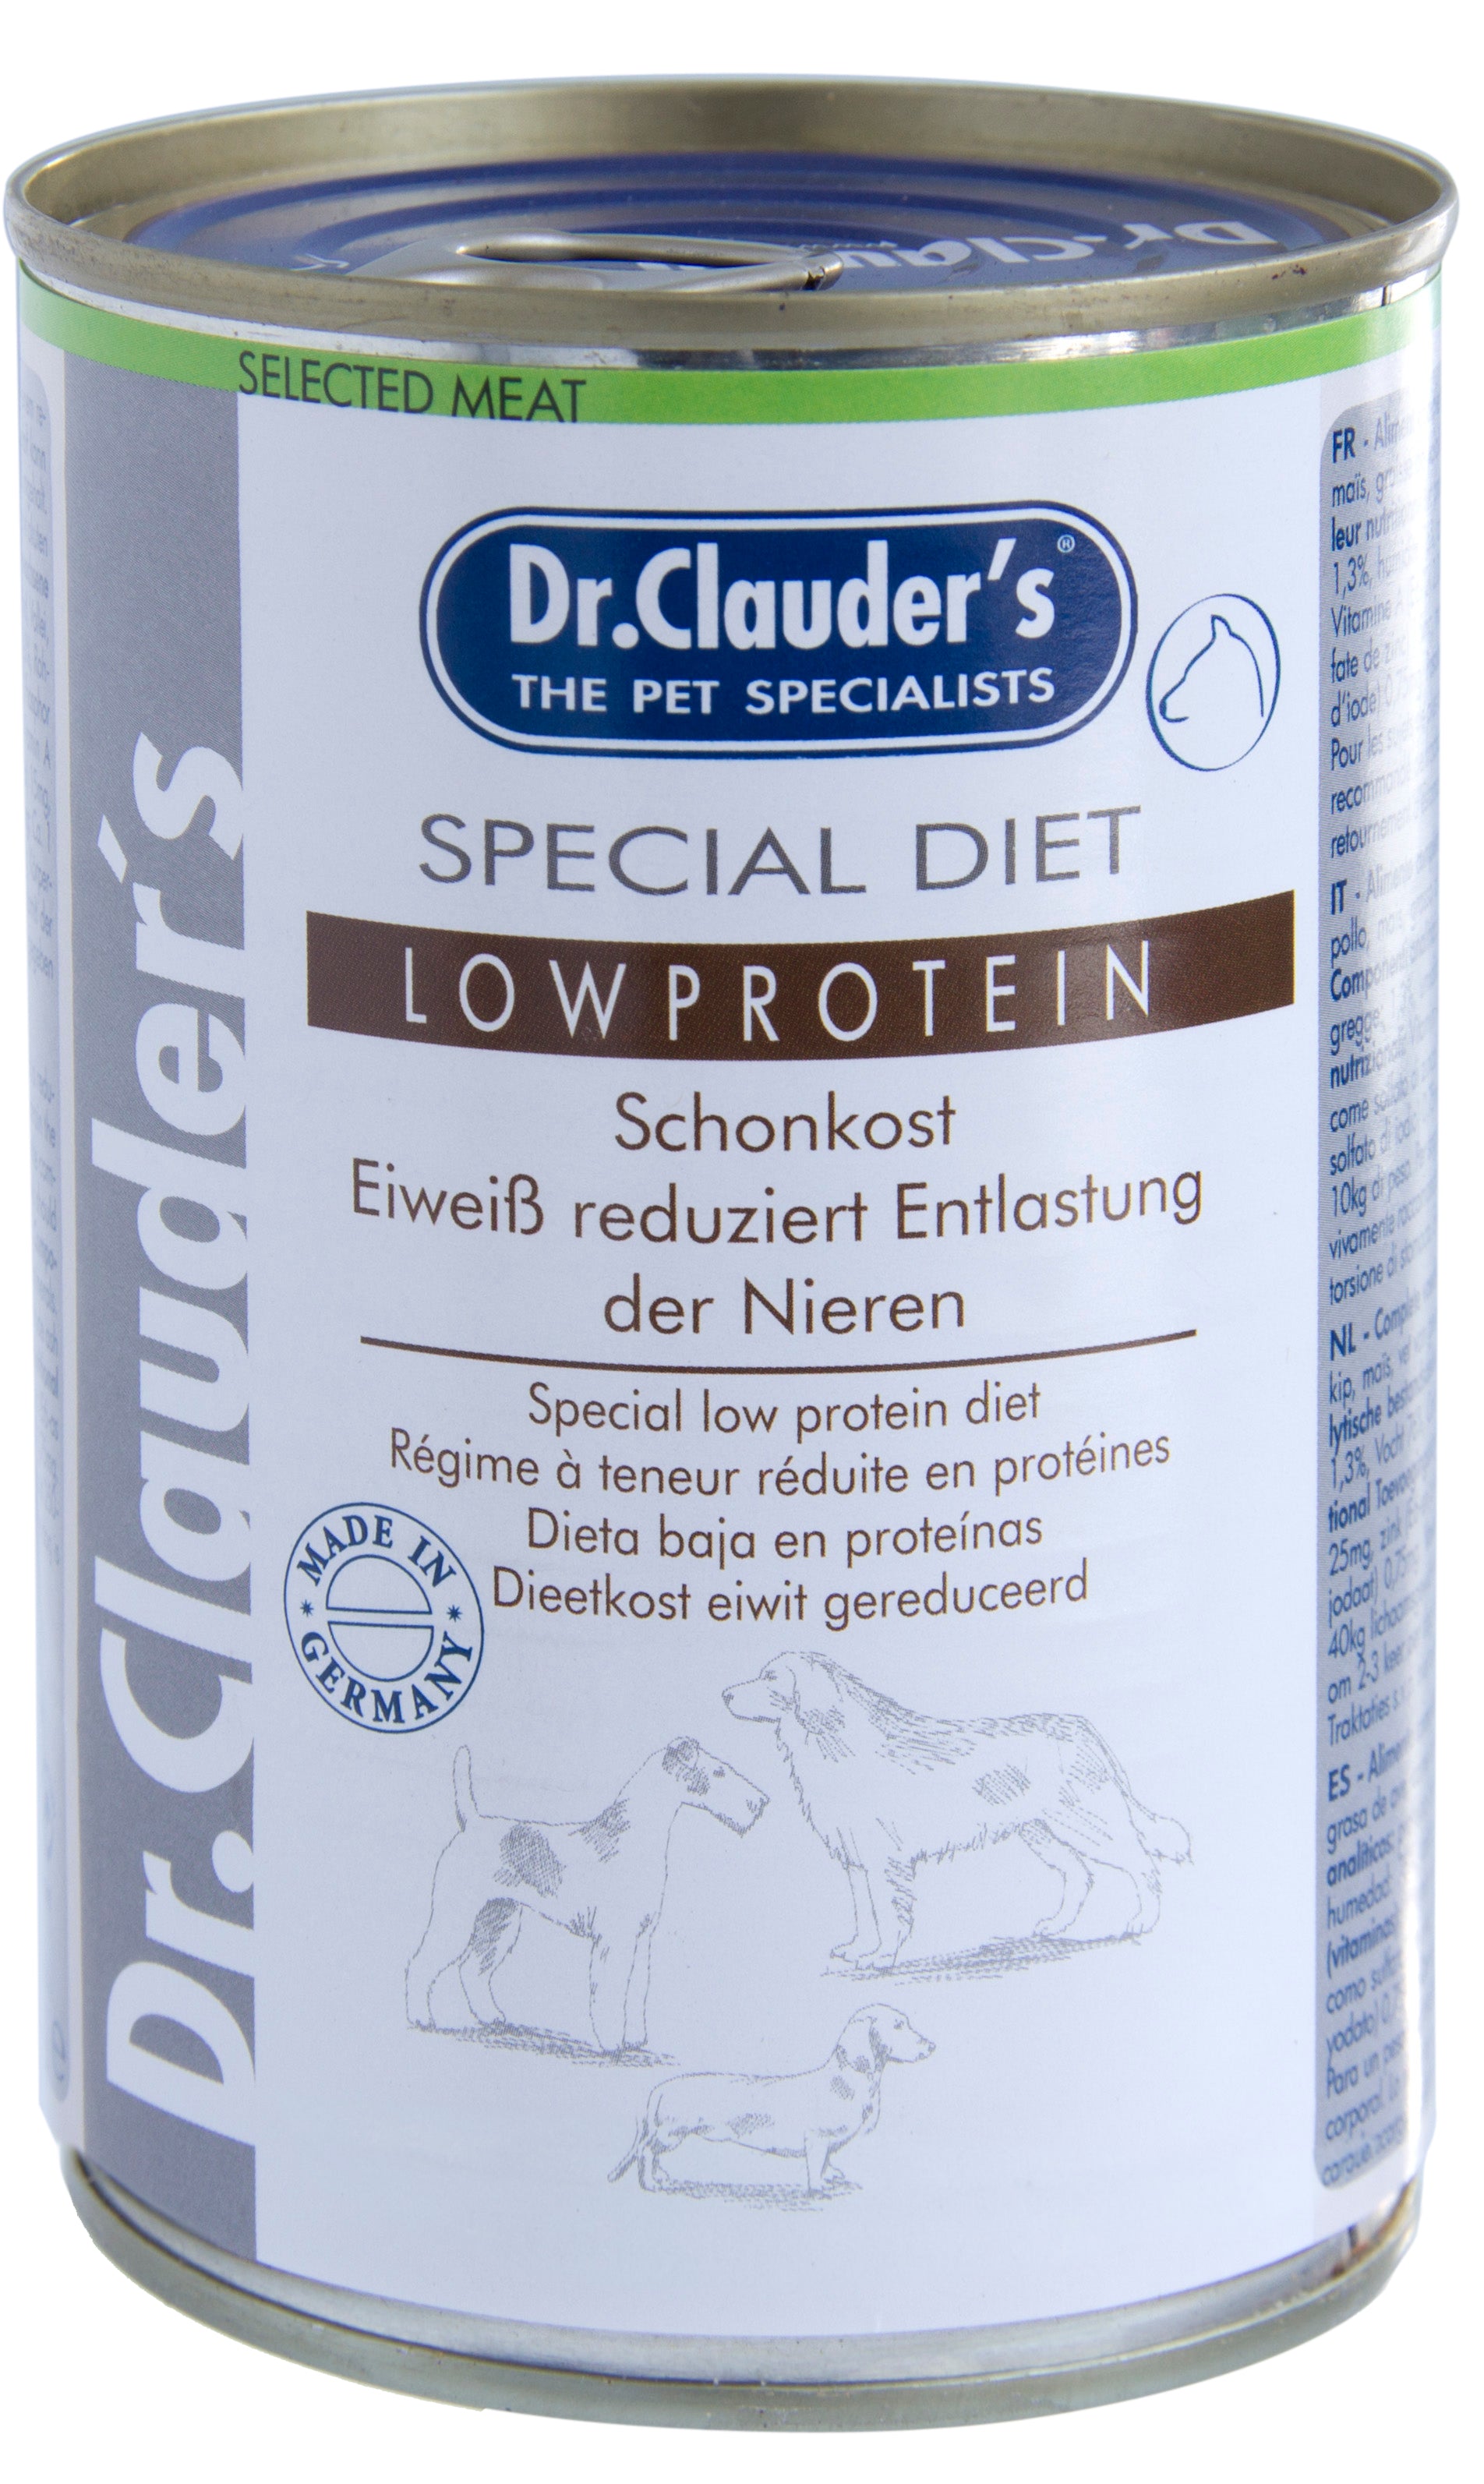 Dr.Clauder's Special Diet LowProtein - zoo.de